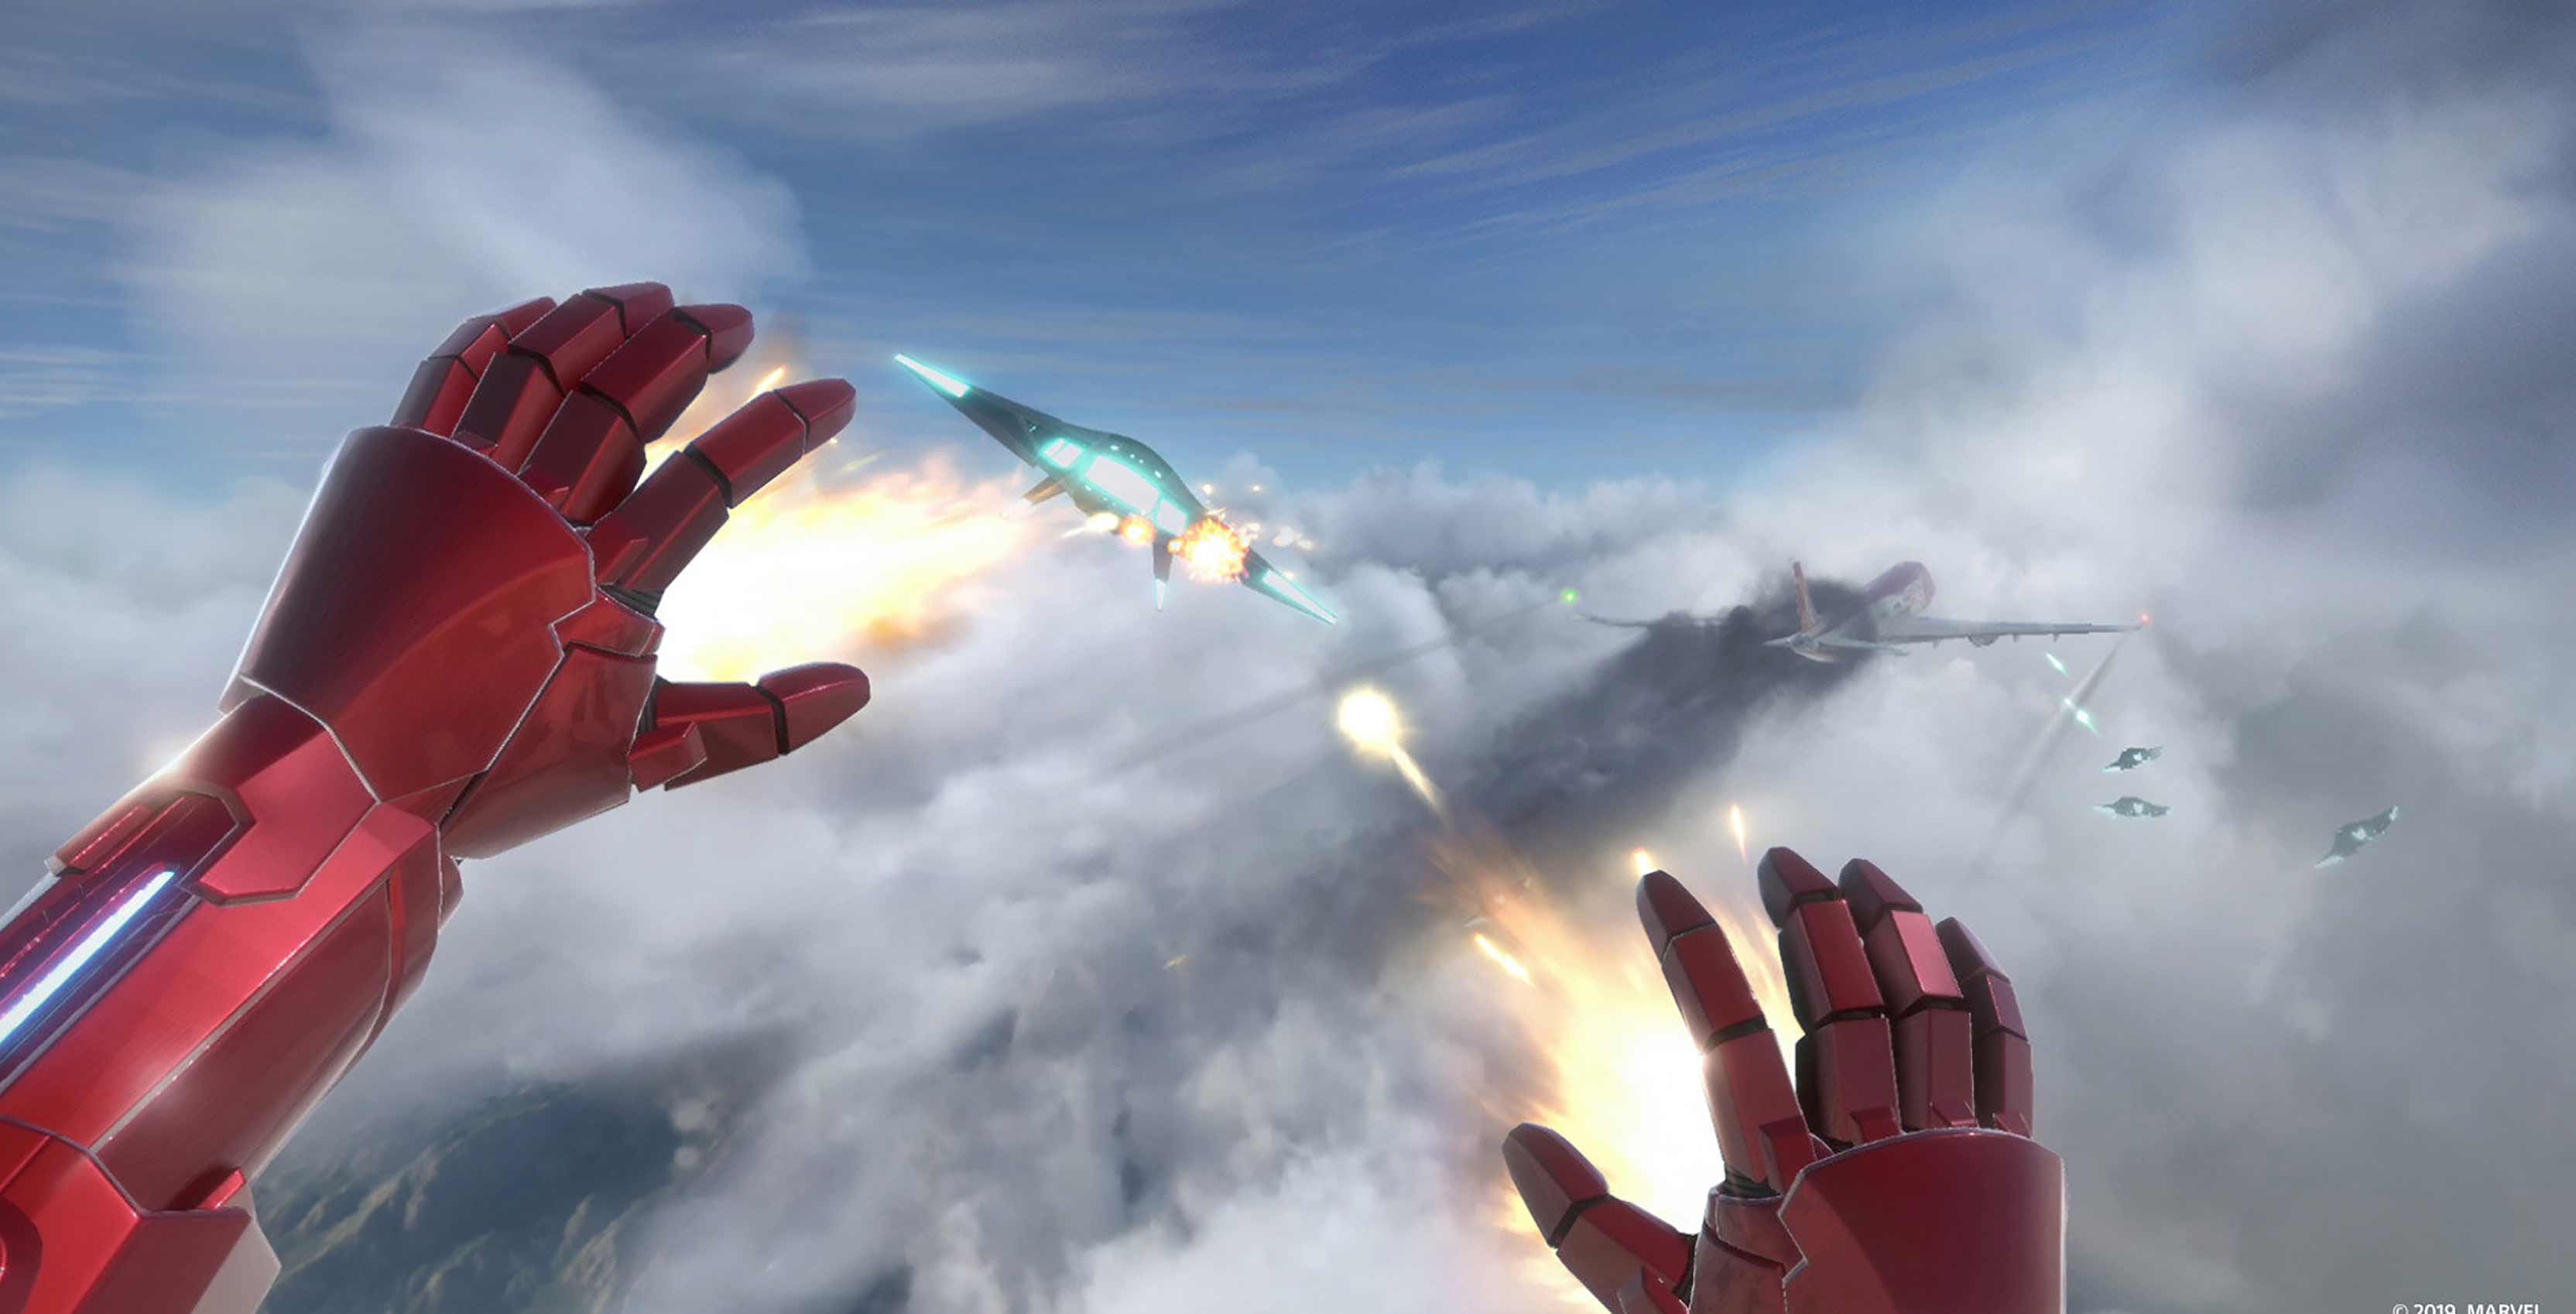 Marvel's Iron Man VR truly makes you feel like the Avenger himself